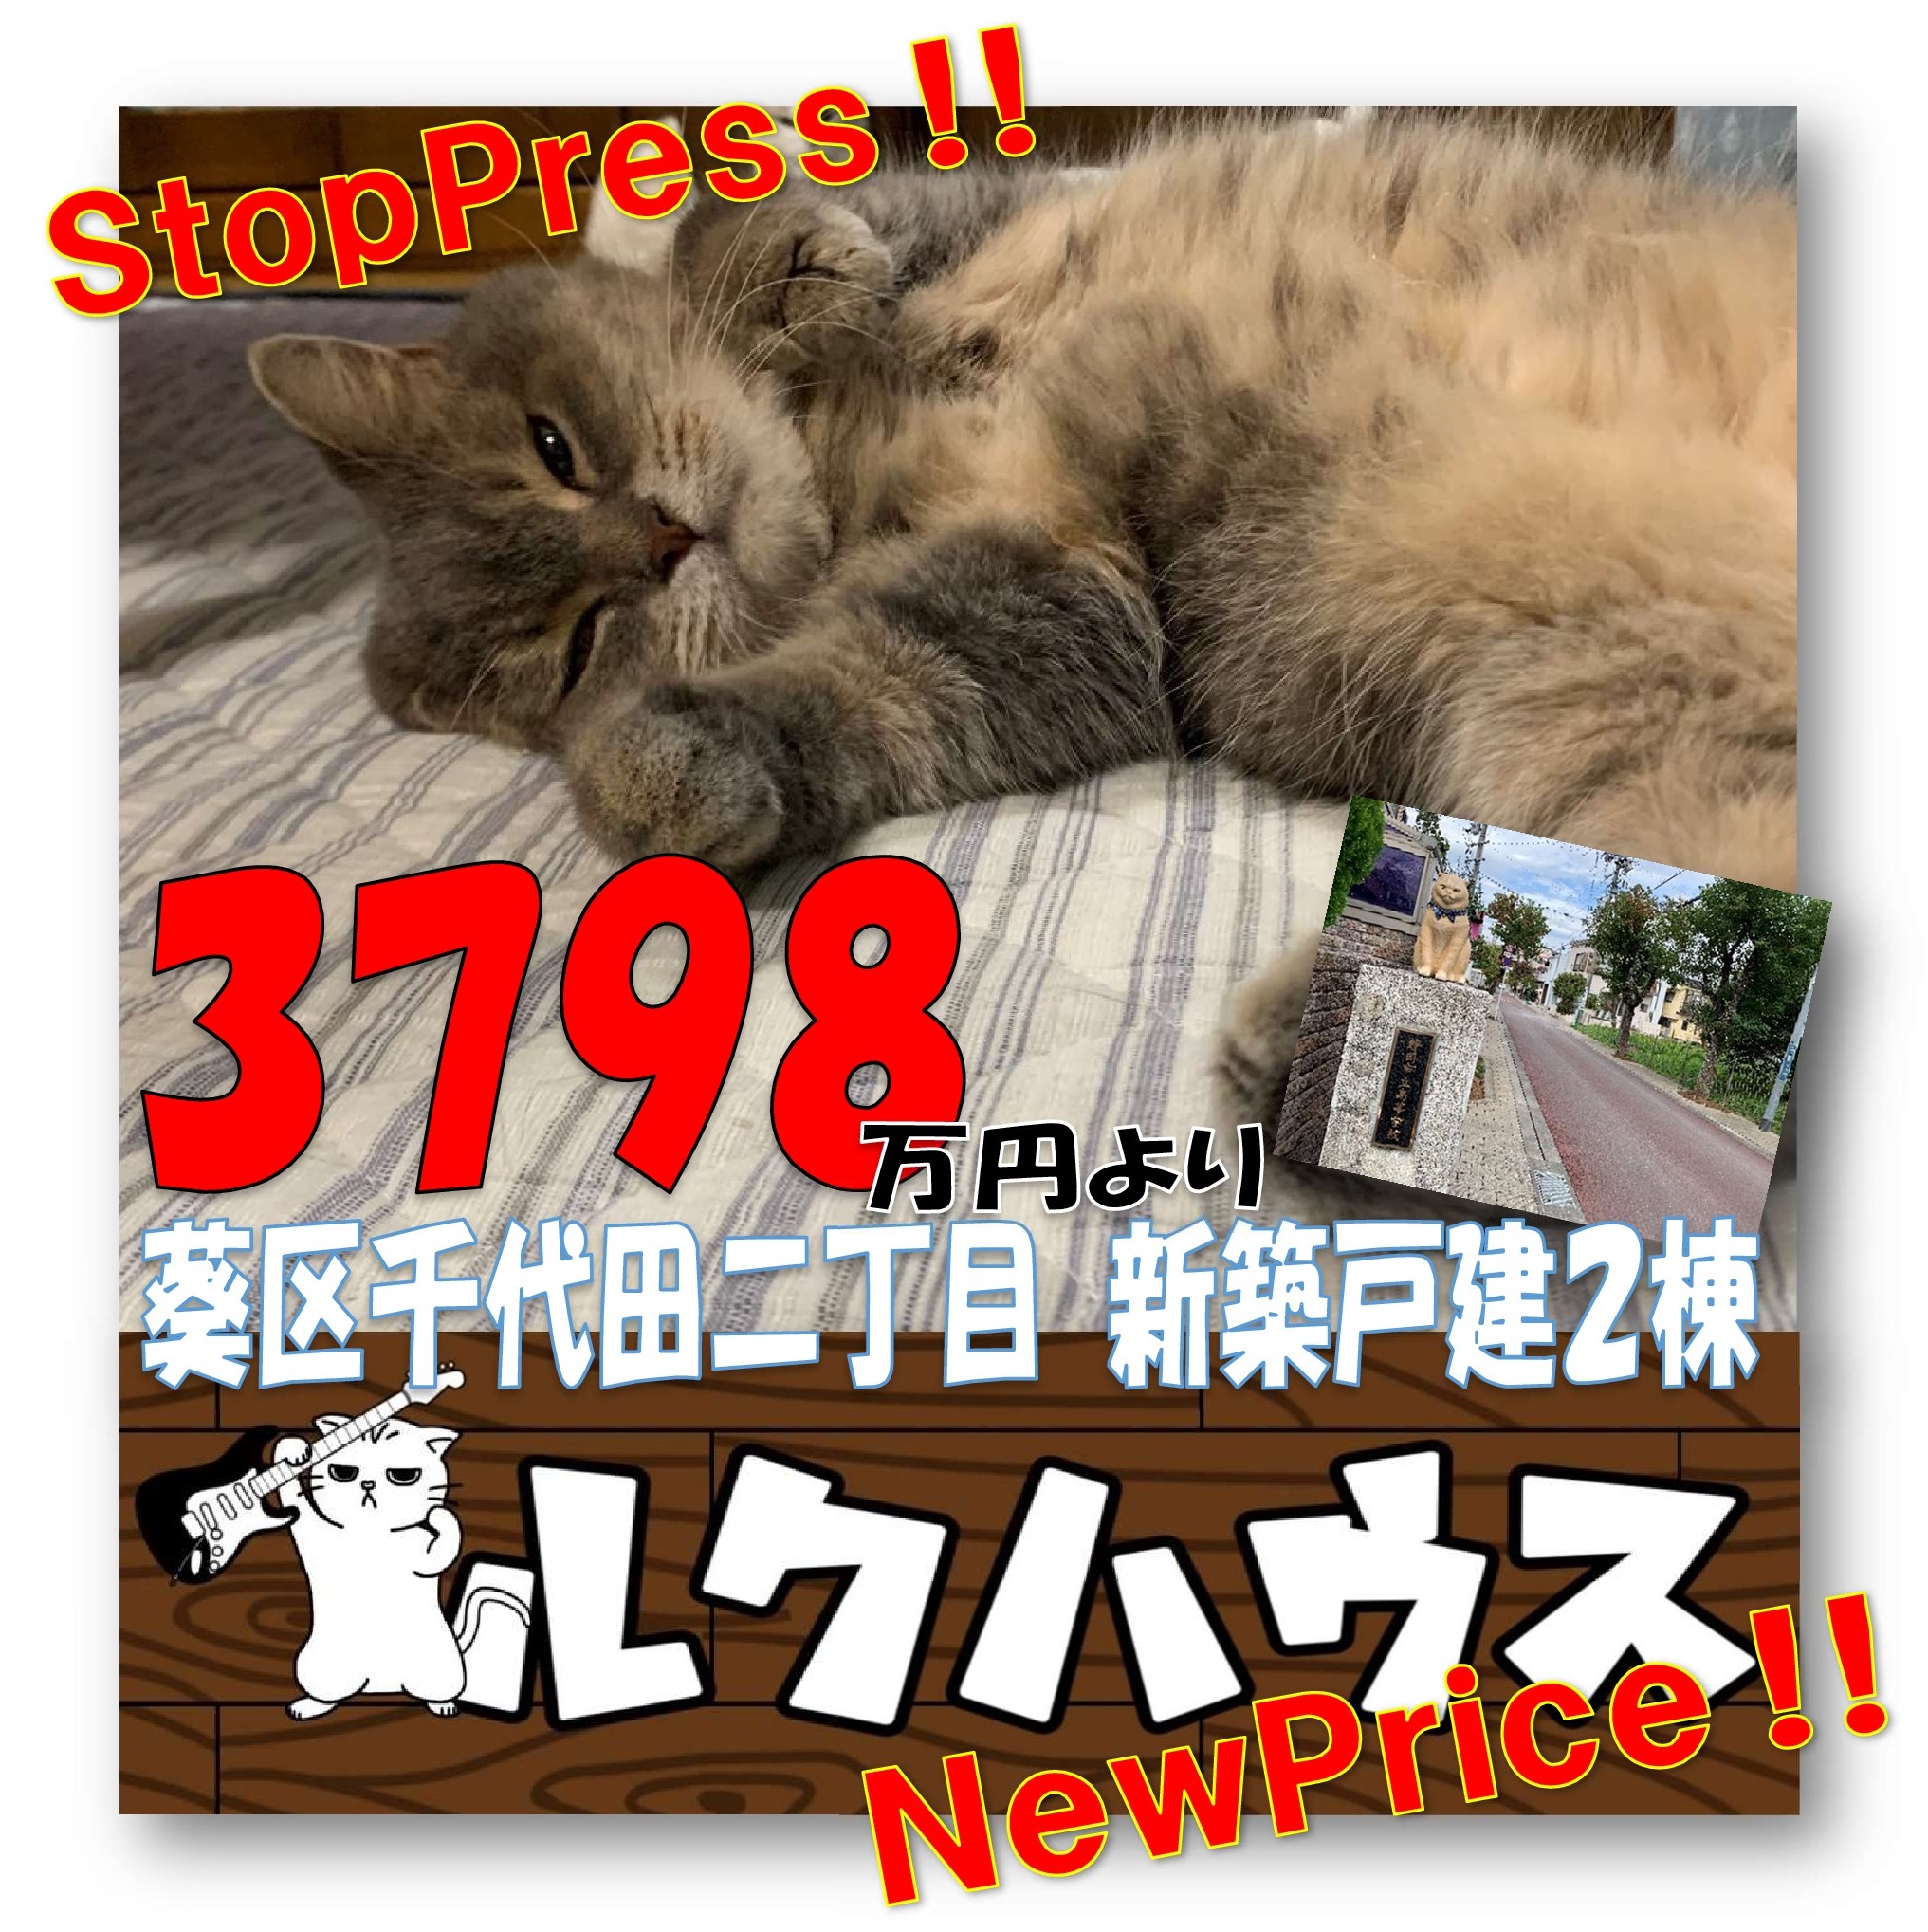 ■NewPriceは３７９８万円■　葵区千代田二丁目・エスポット真裏の新築戸建